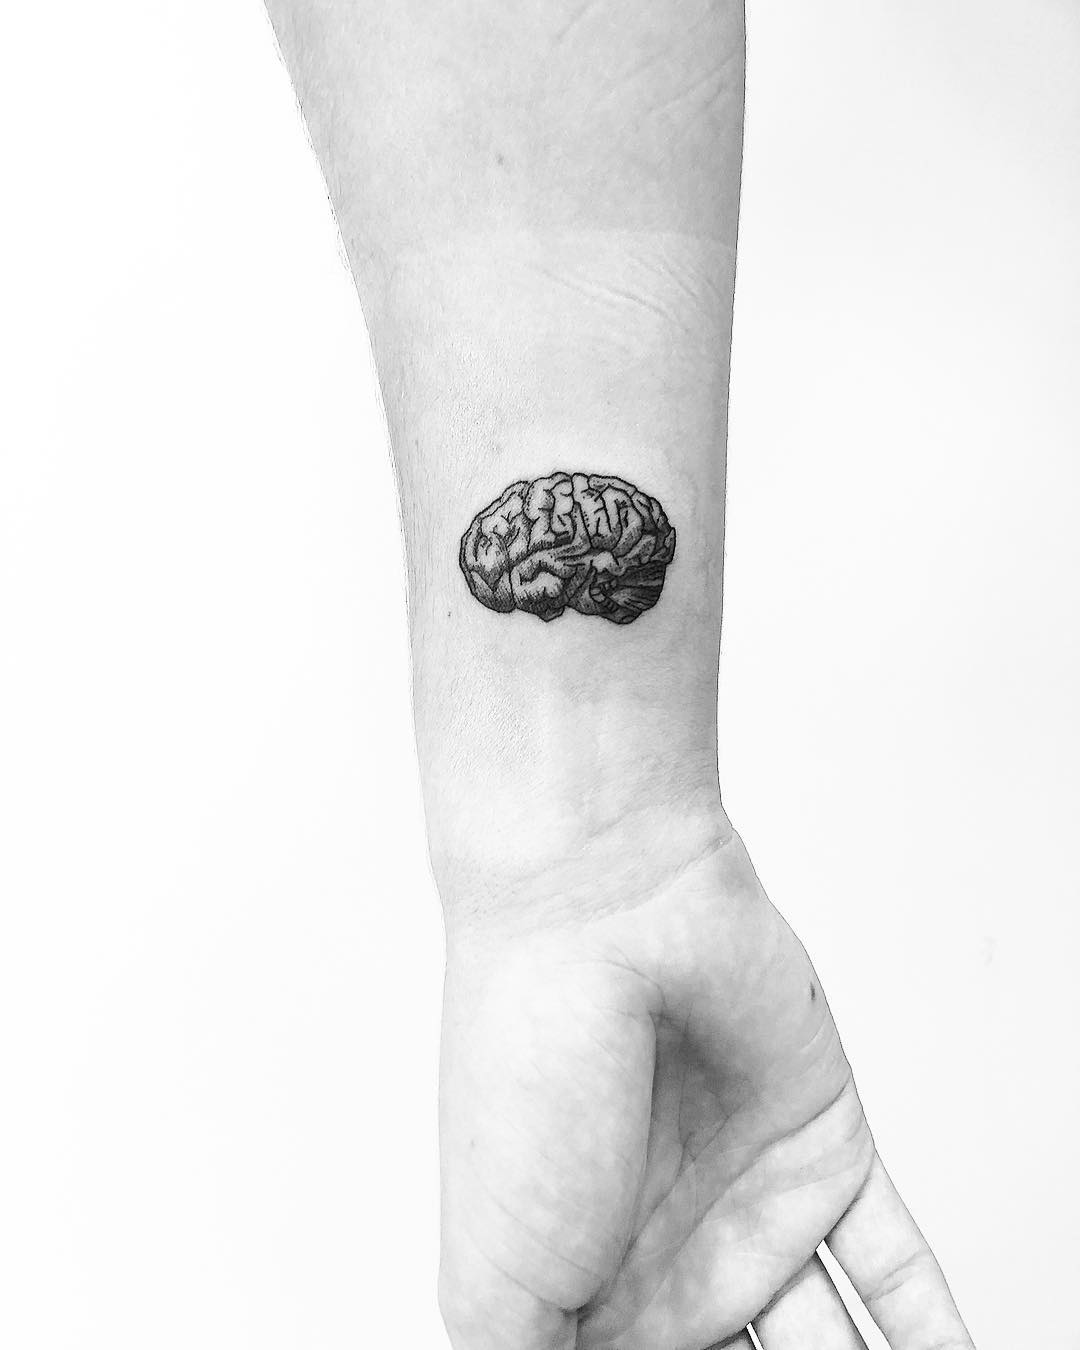 Anatomical brain by Jake Harry Ditchfield